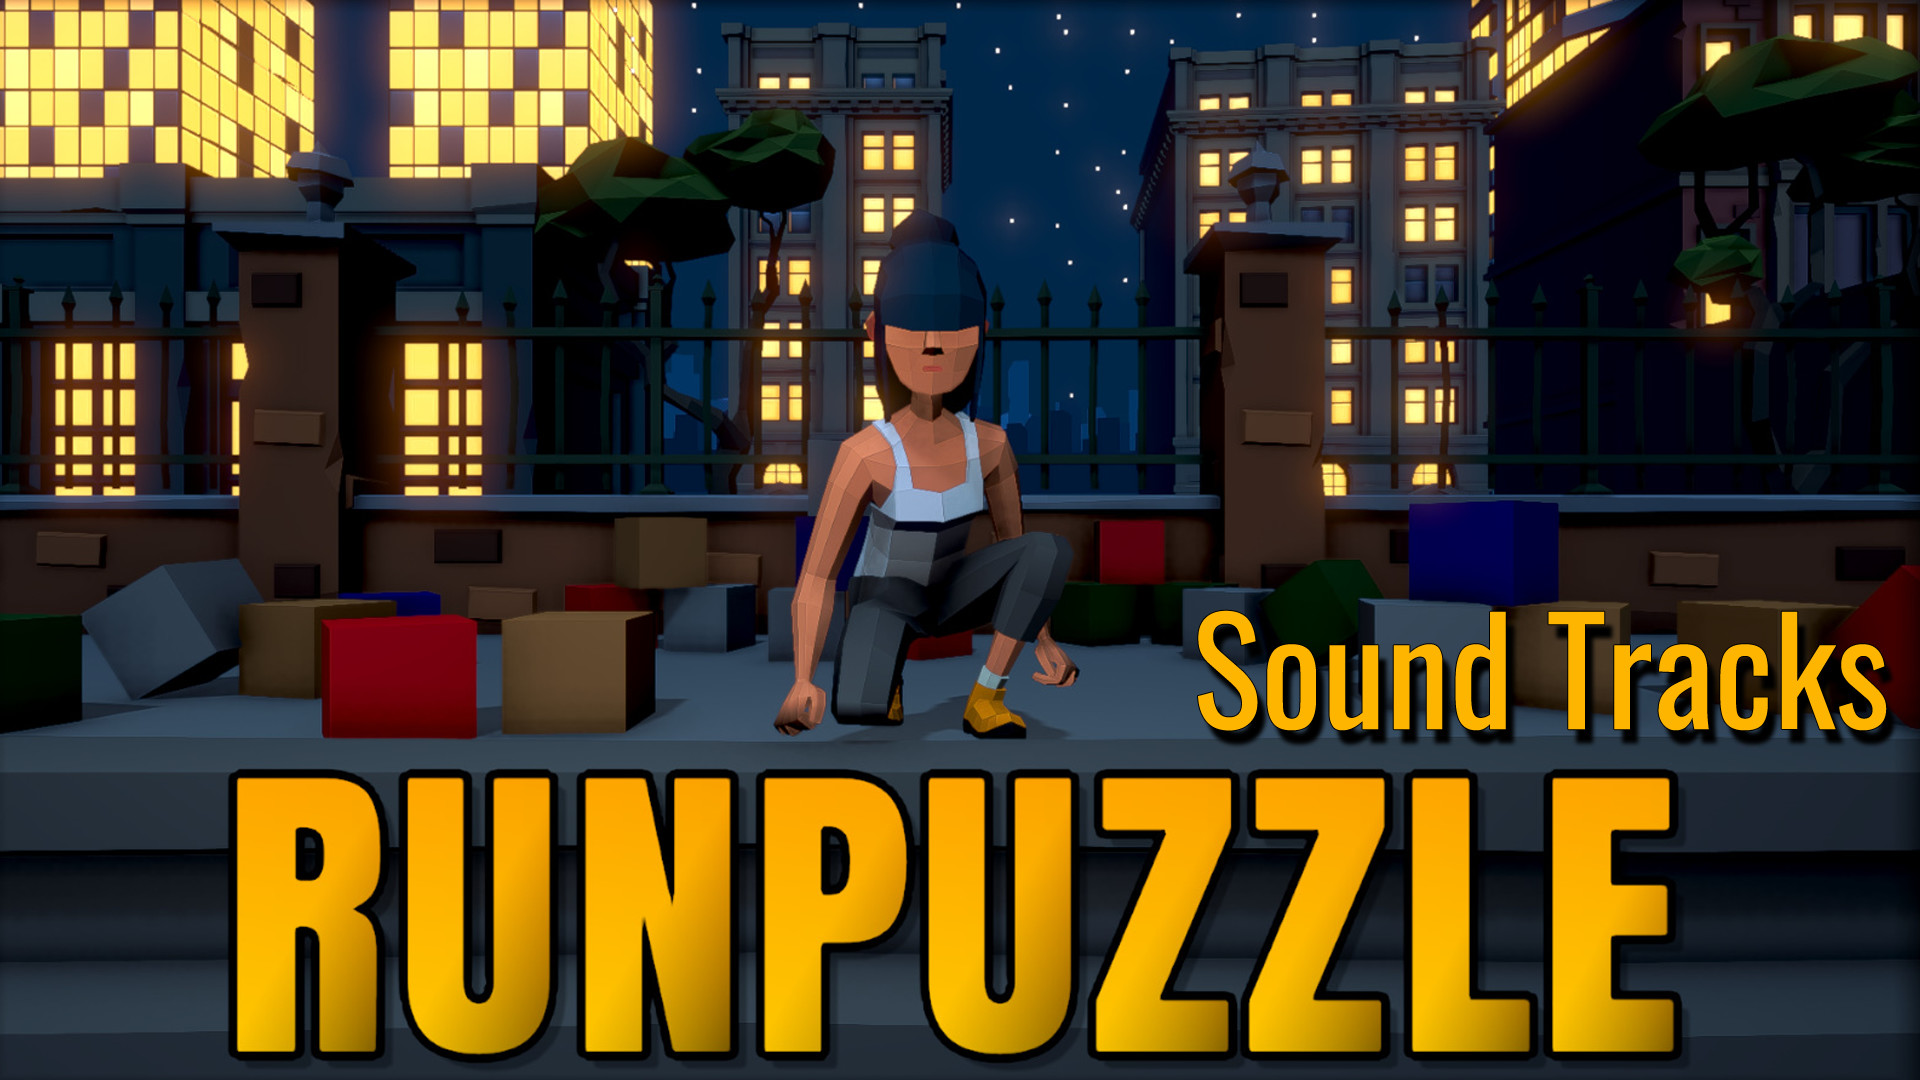 RUNPUZZLE Soundtrack screenshot